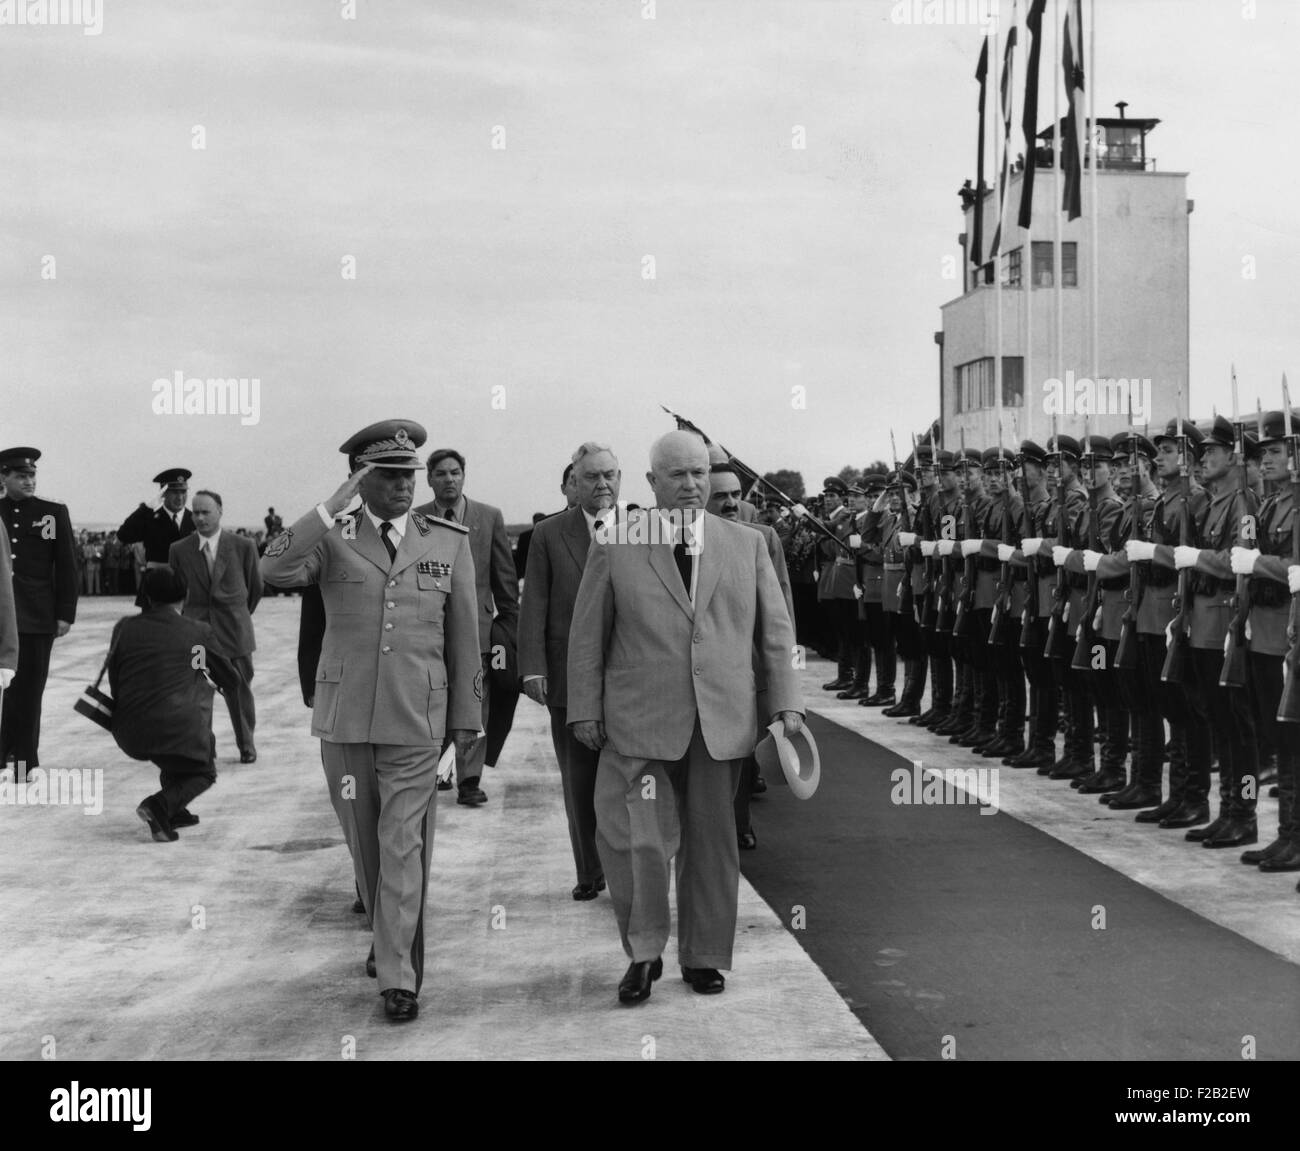 Nikita Khrushchev walks with Josip Tito, Yugoslav Communist leader in Belgrade, June 1955. Walking behind is Nikolai Bulganin, indicating Khrushchev's higher position in Soviet Leadership following the death of Josef Stalin in March 1953 (CSU 2015 8 541) Stock Photo